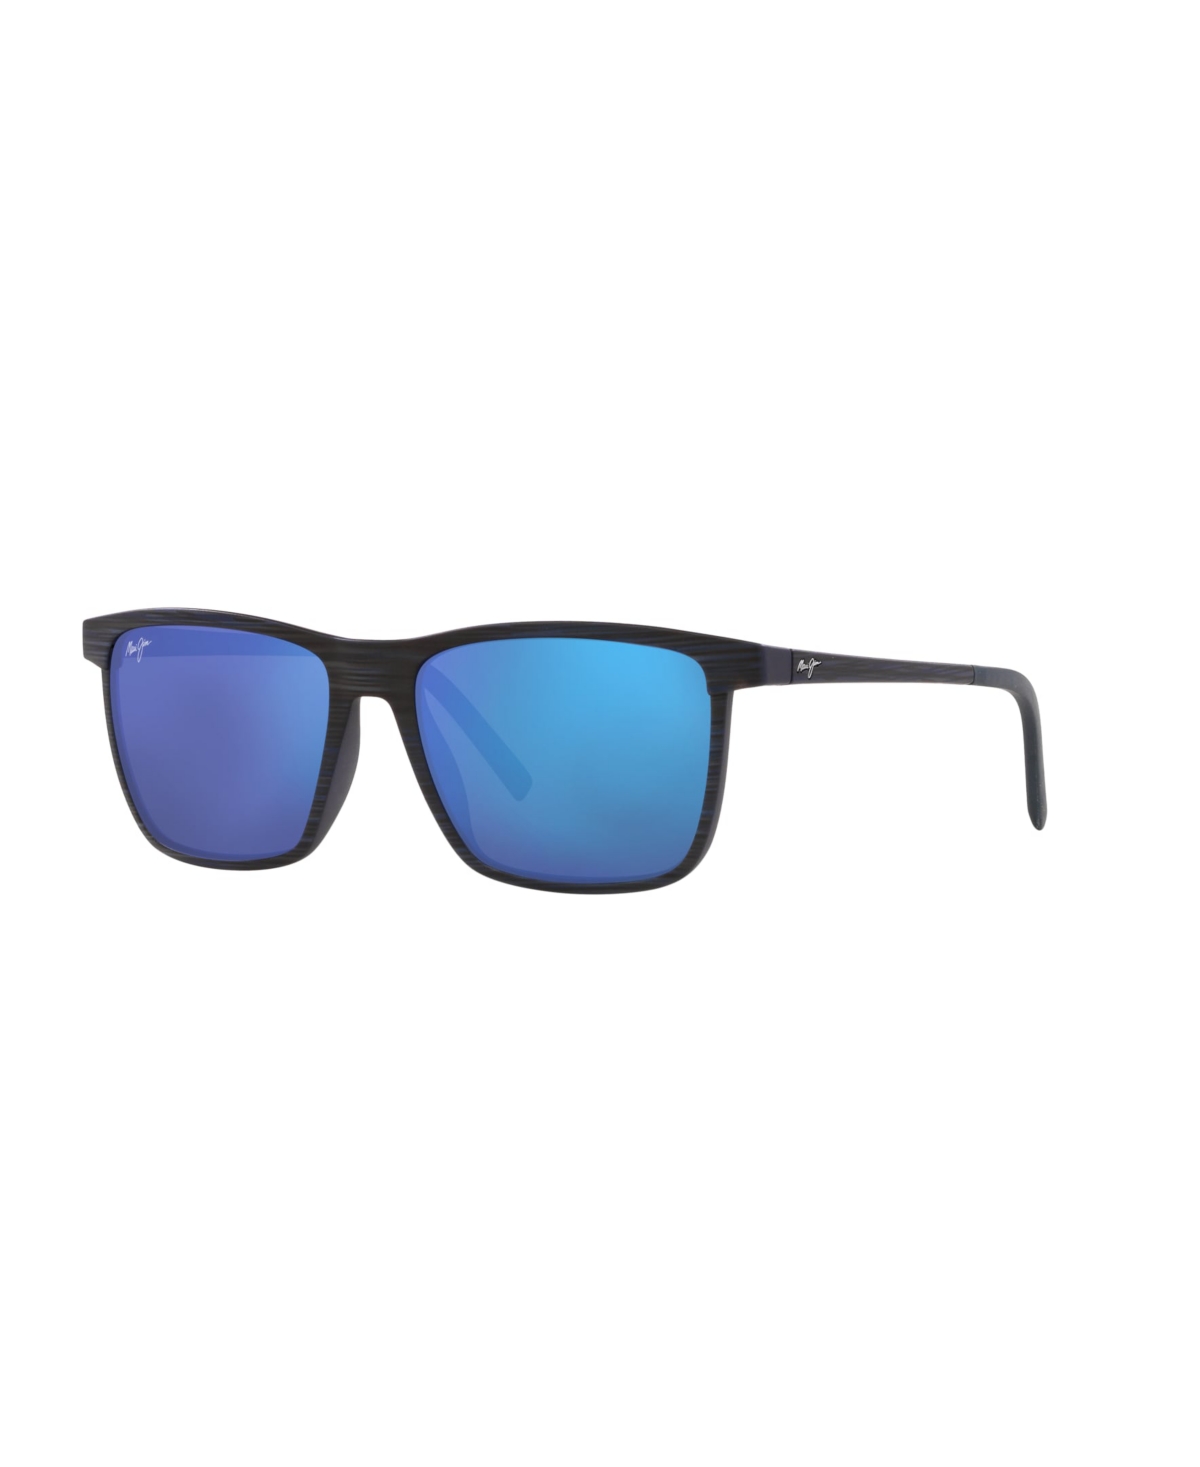 Maui Jim Unisex Polarized Sunglasses, One Way In Blue Dark